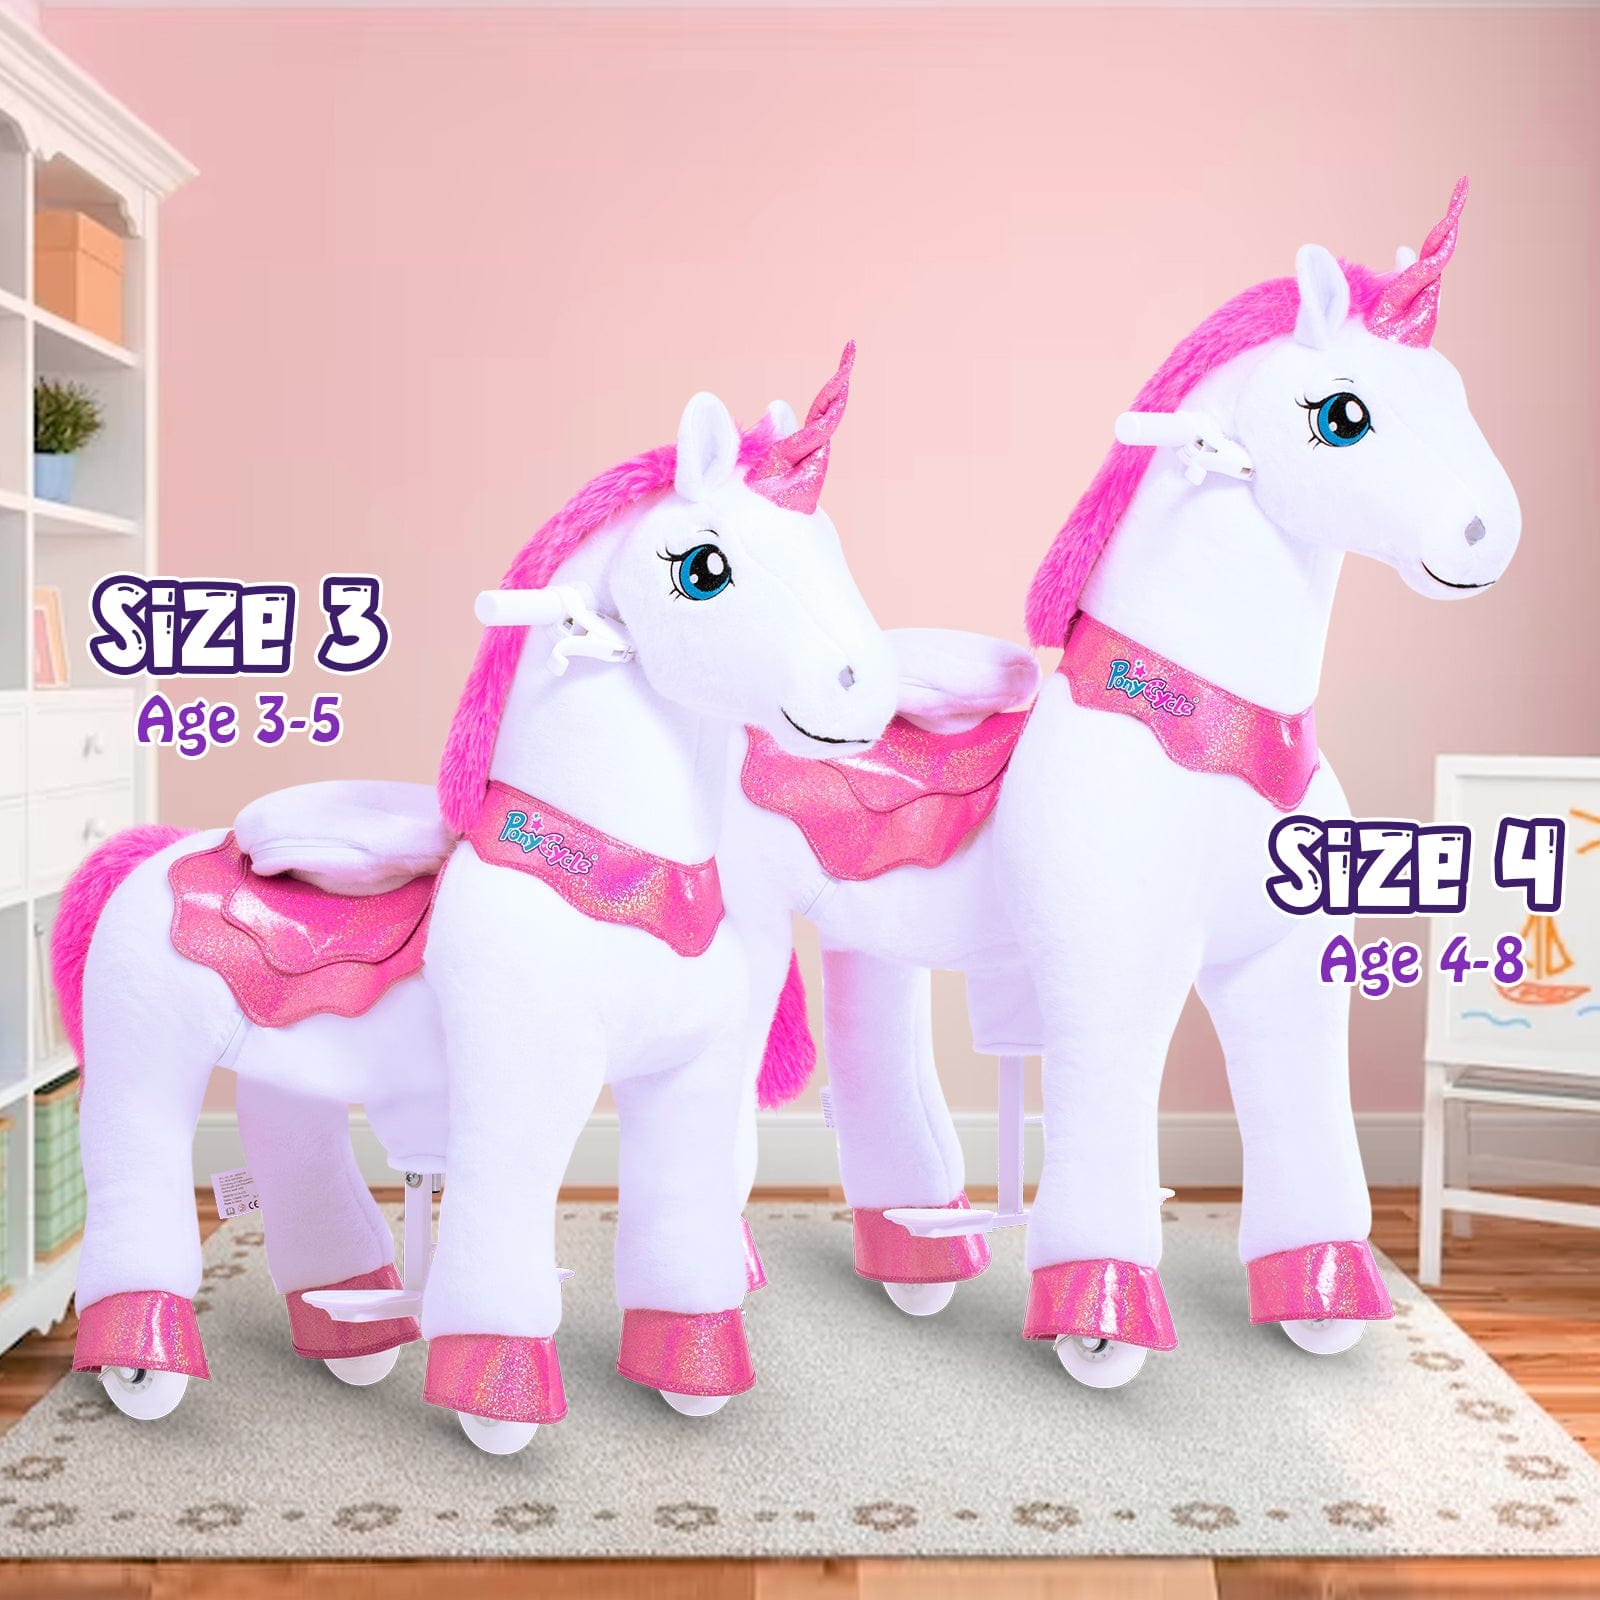 PonyCycle, Inc. ride on toy Purple Accessories Set+Model E Ride On Unicorn